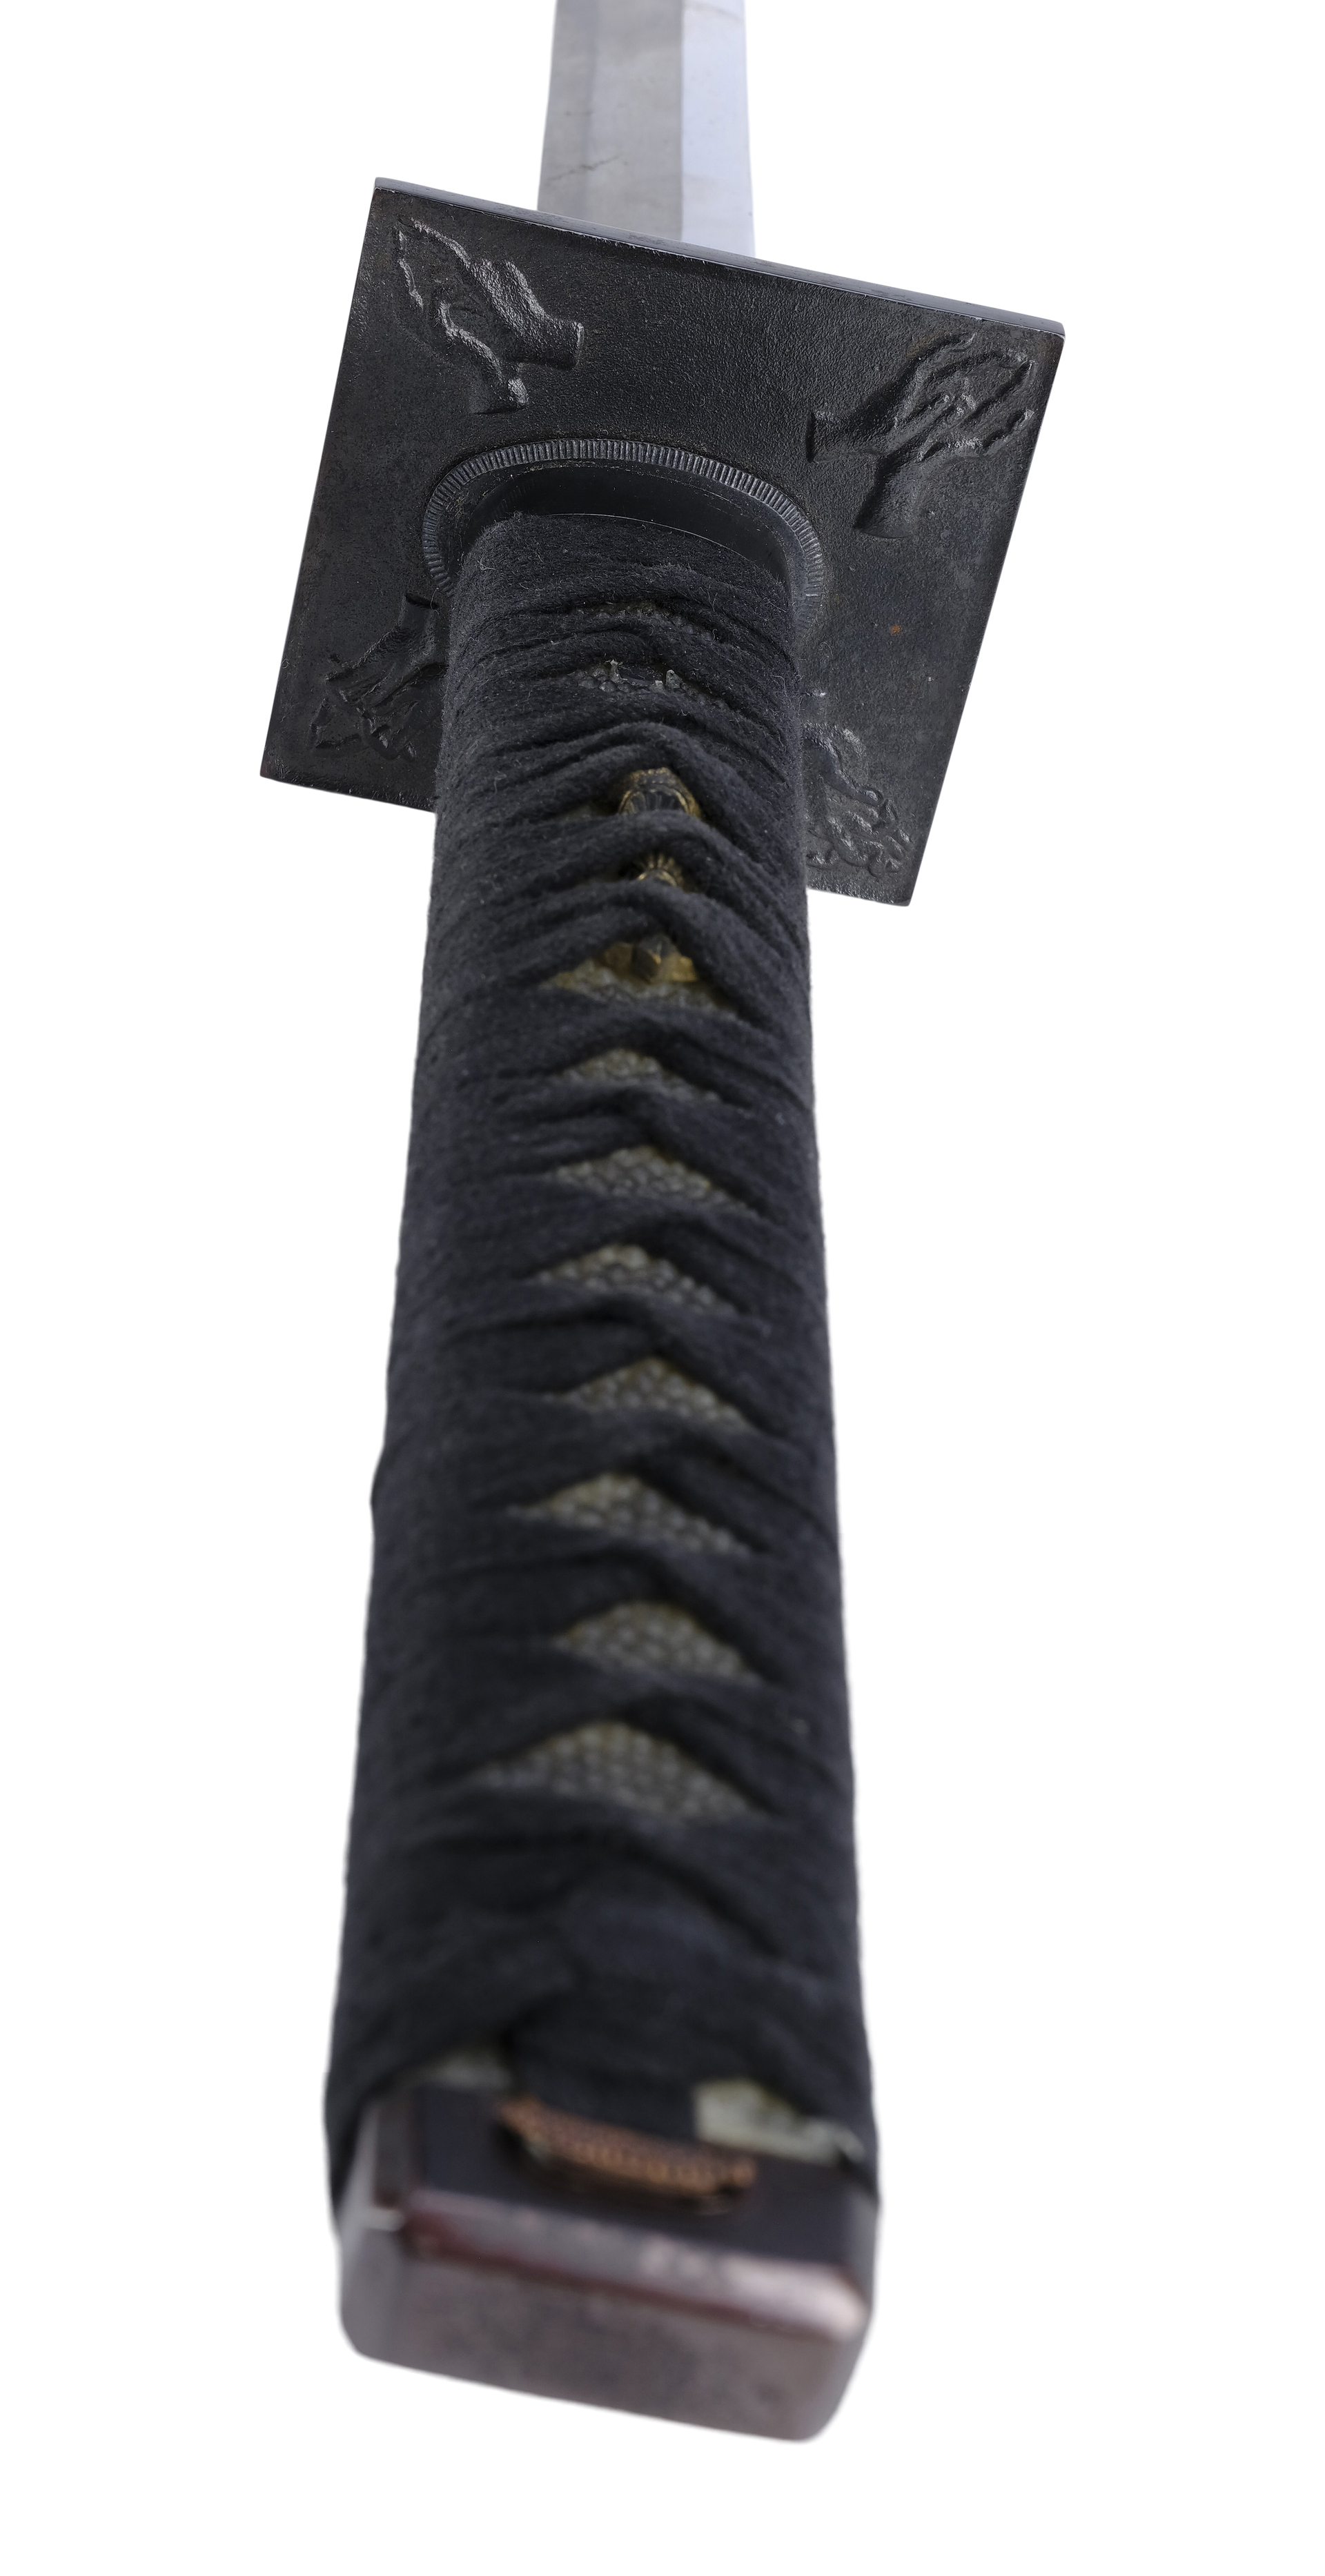 ELEKTRA (2005) - Chokuto Sword with Sheath - Image 6 of 8